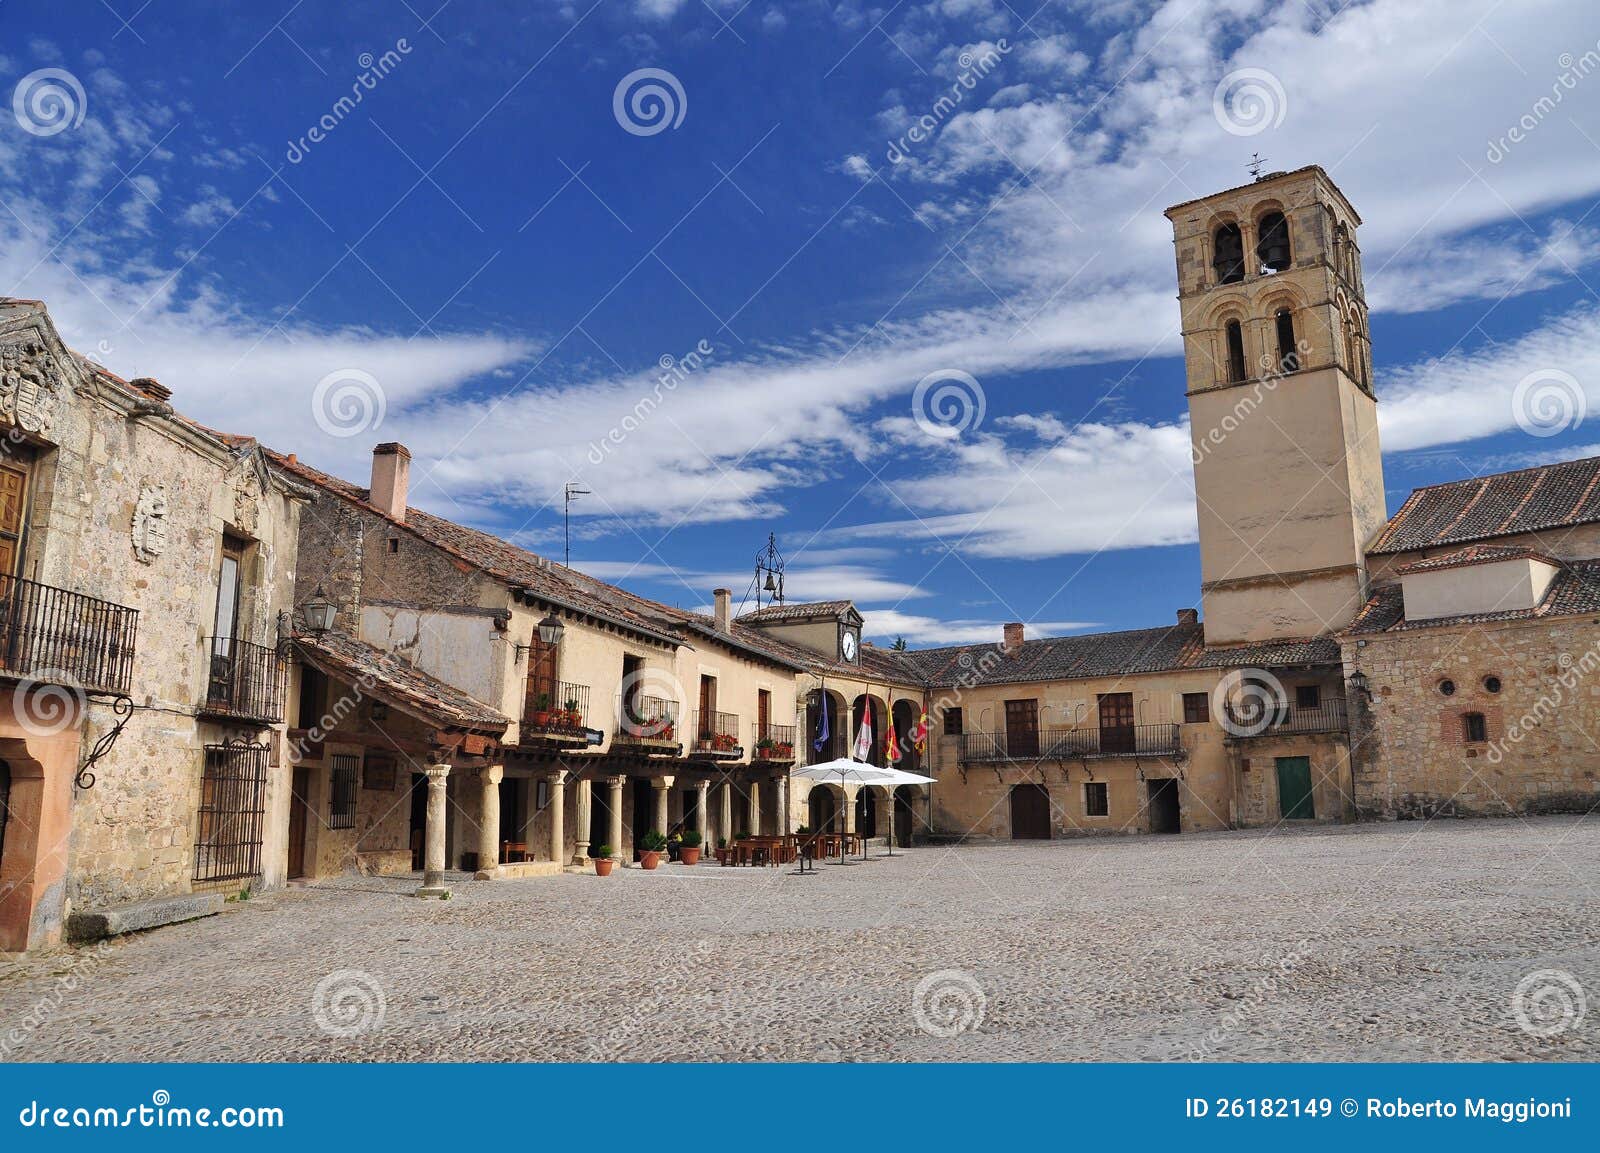 spanish village pedraza, main square. castile, spain